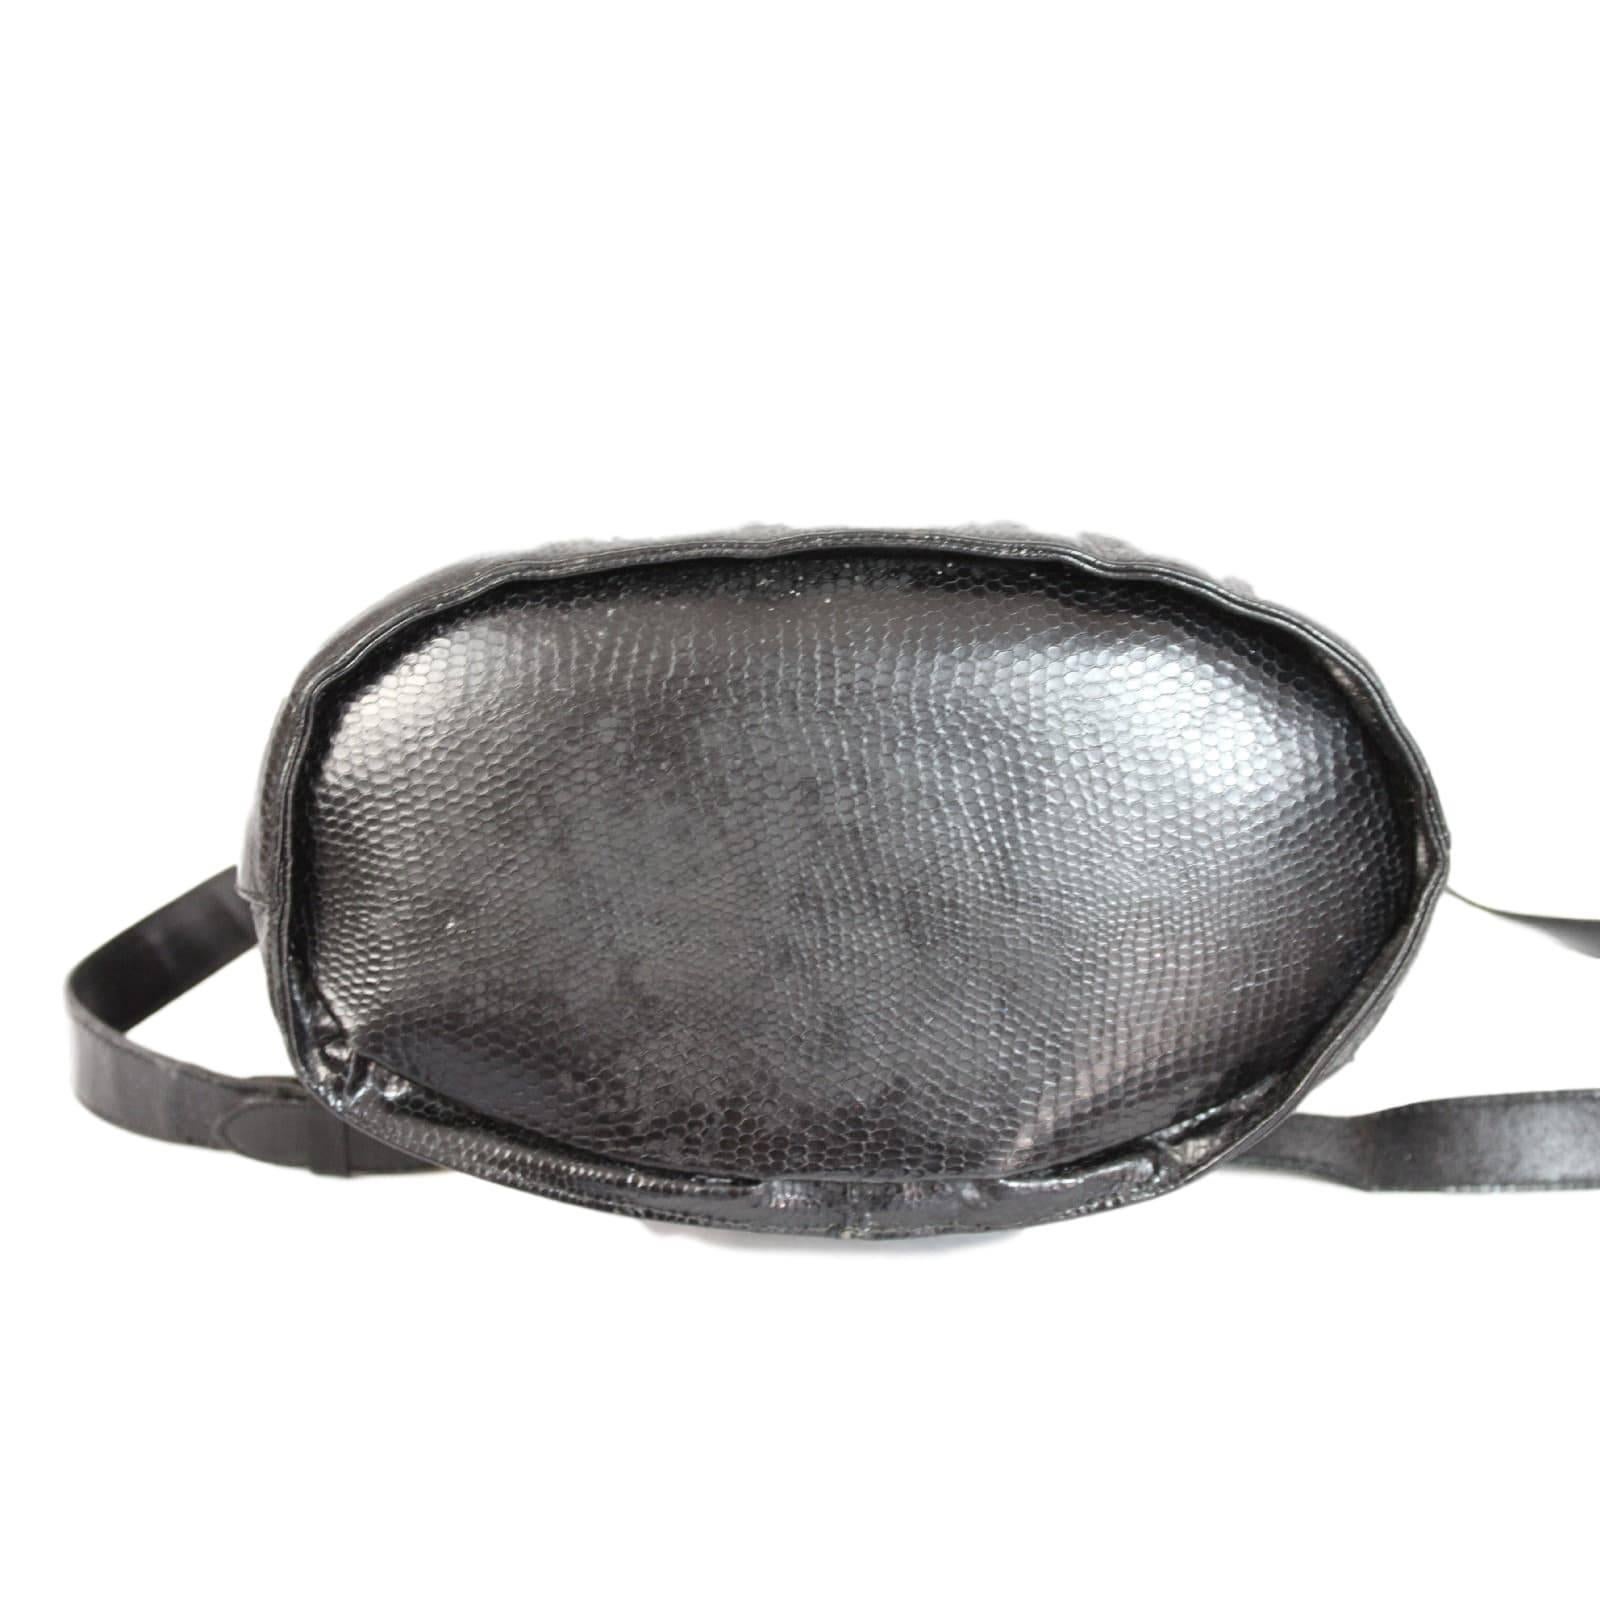 Salvatore Ferragamo Bucket Black Python Snake Skin Leather Italian Shoulder Bag In Good Condition For Sale In Brindisi, IT